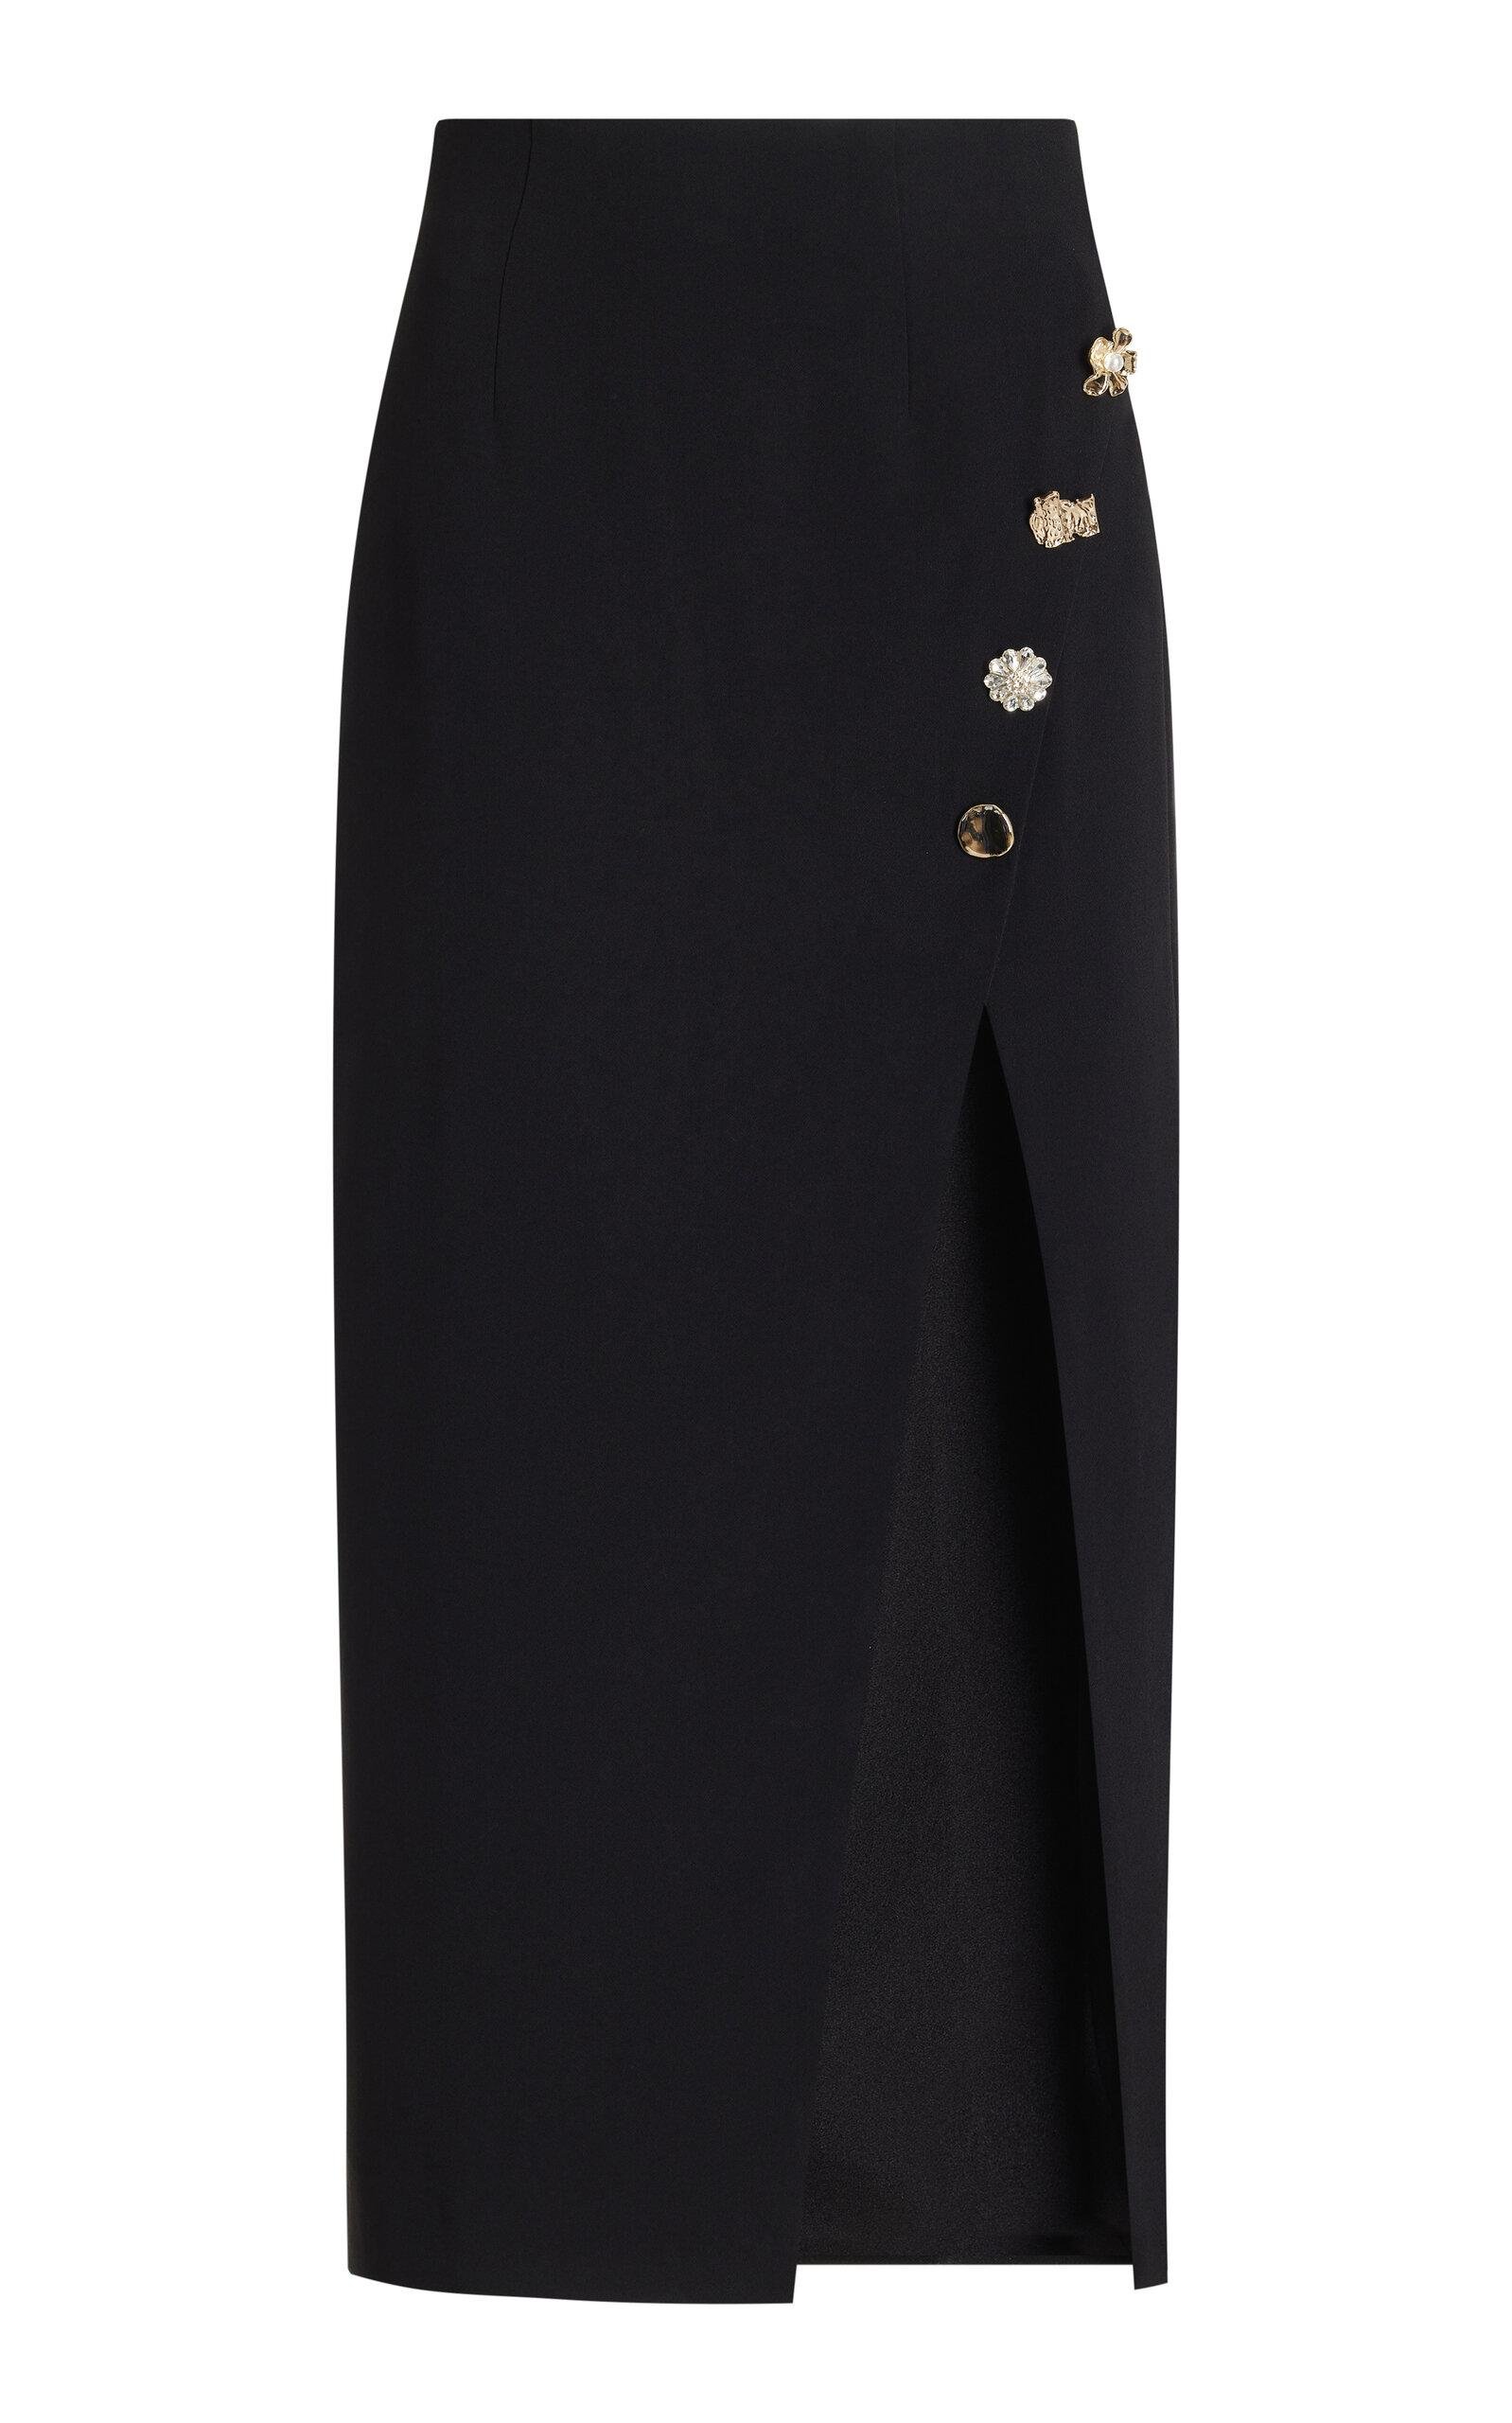 Self Portrait - Embellished Crepe Midi Skirt - Black - US 8 - Moda Operandi by SELF-PORTRAIT